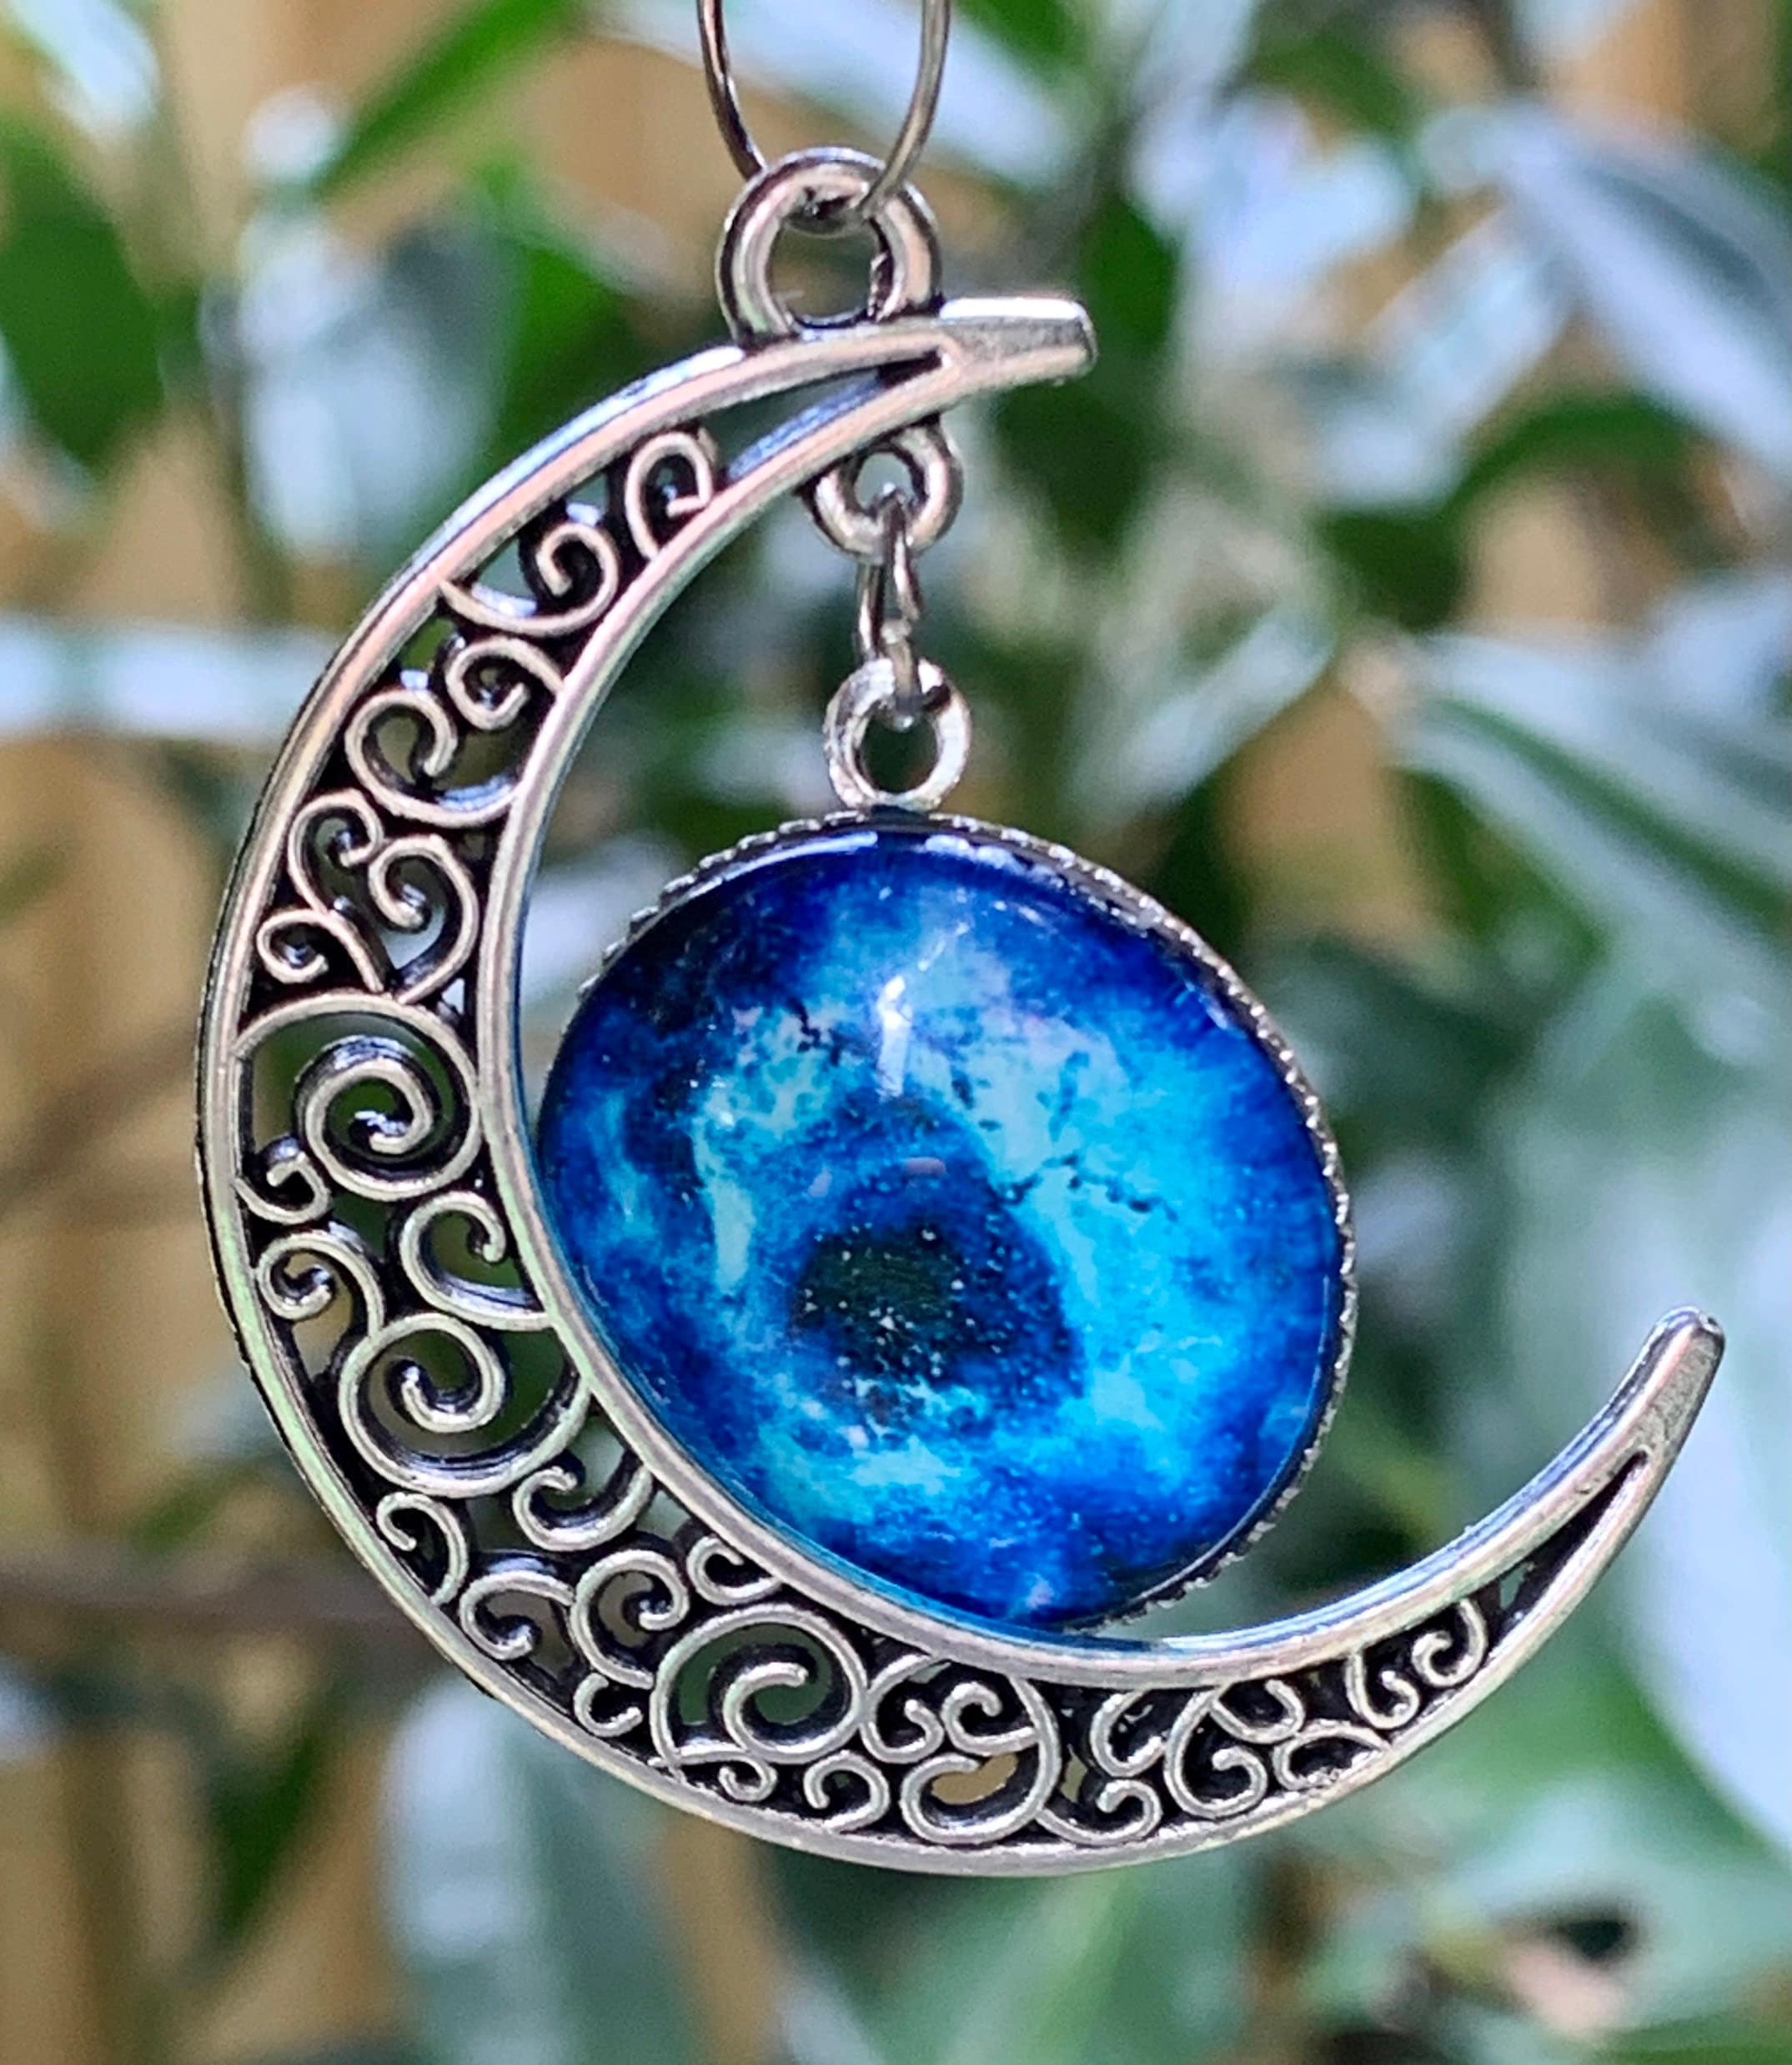 Moon and Stars theme crystal glass suncatcher | Etsy